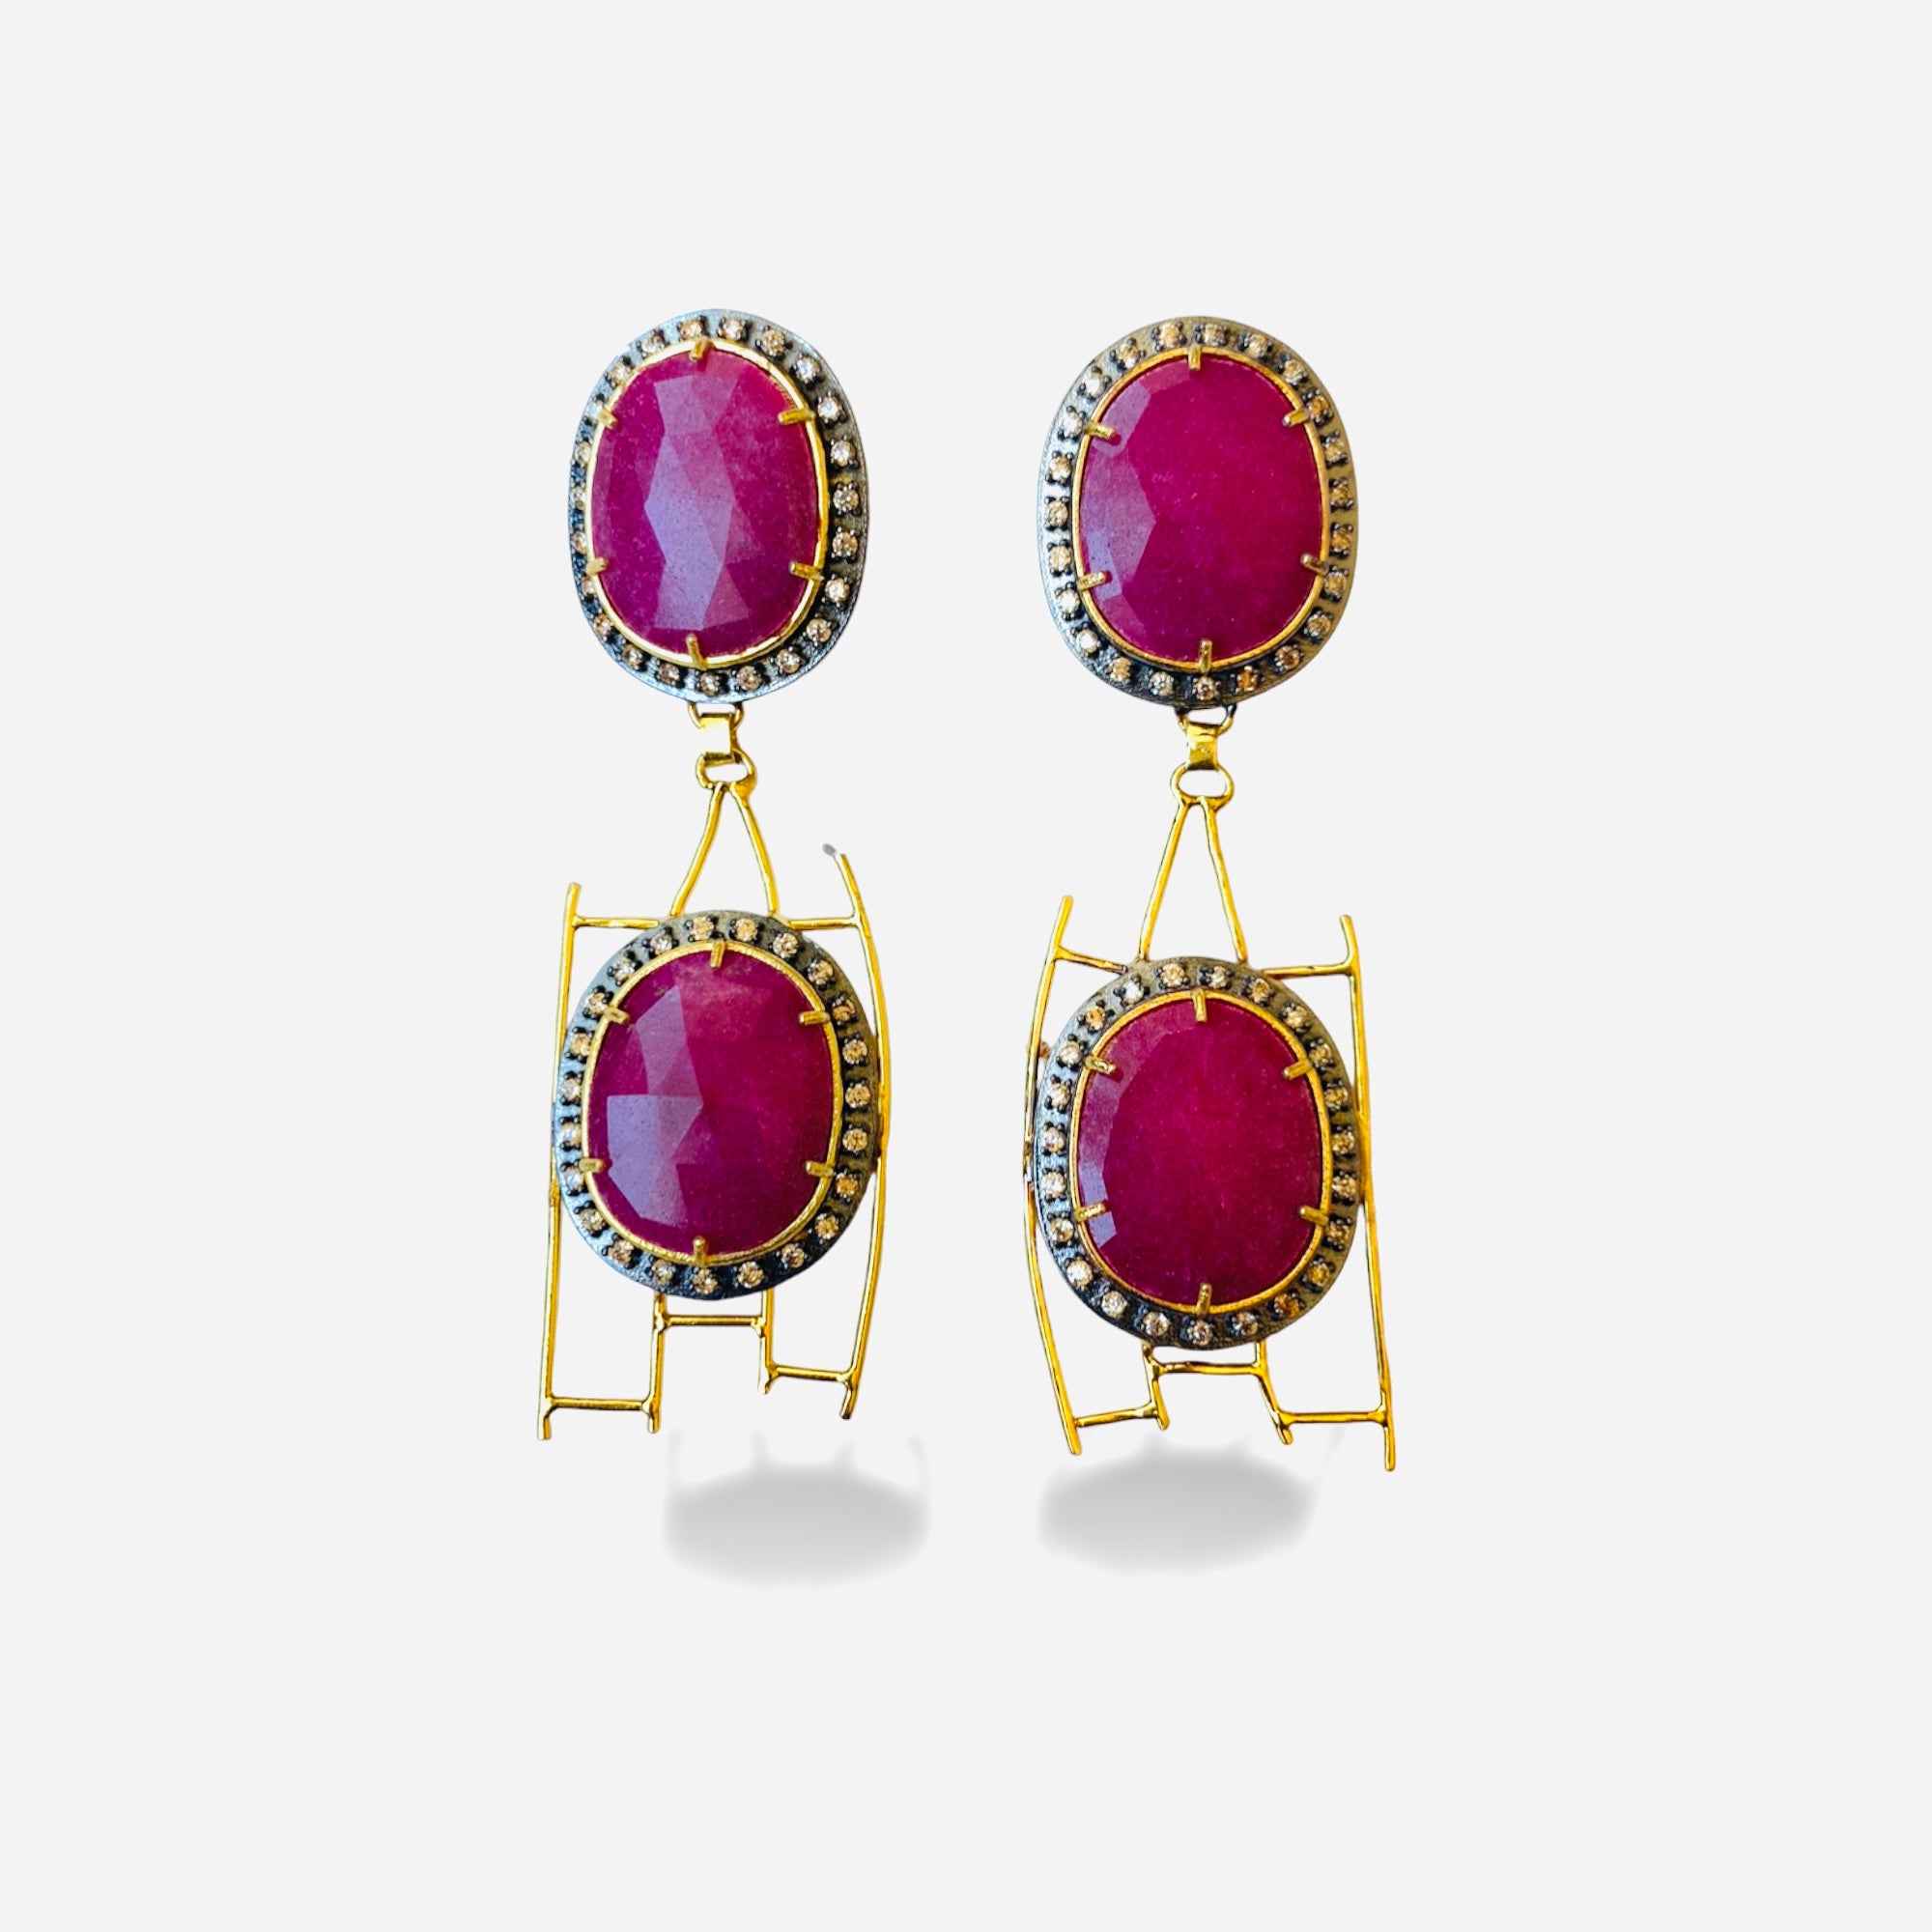 Raspberry Radiance earrings